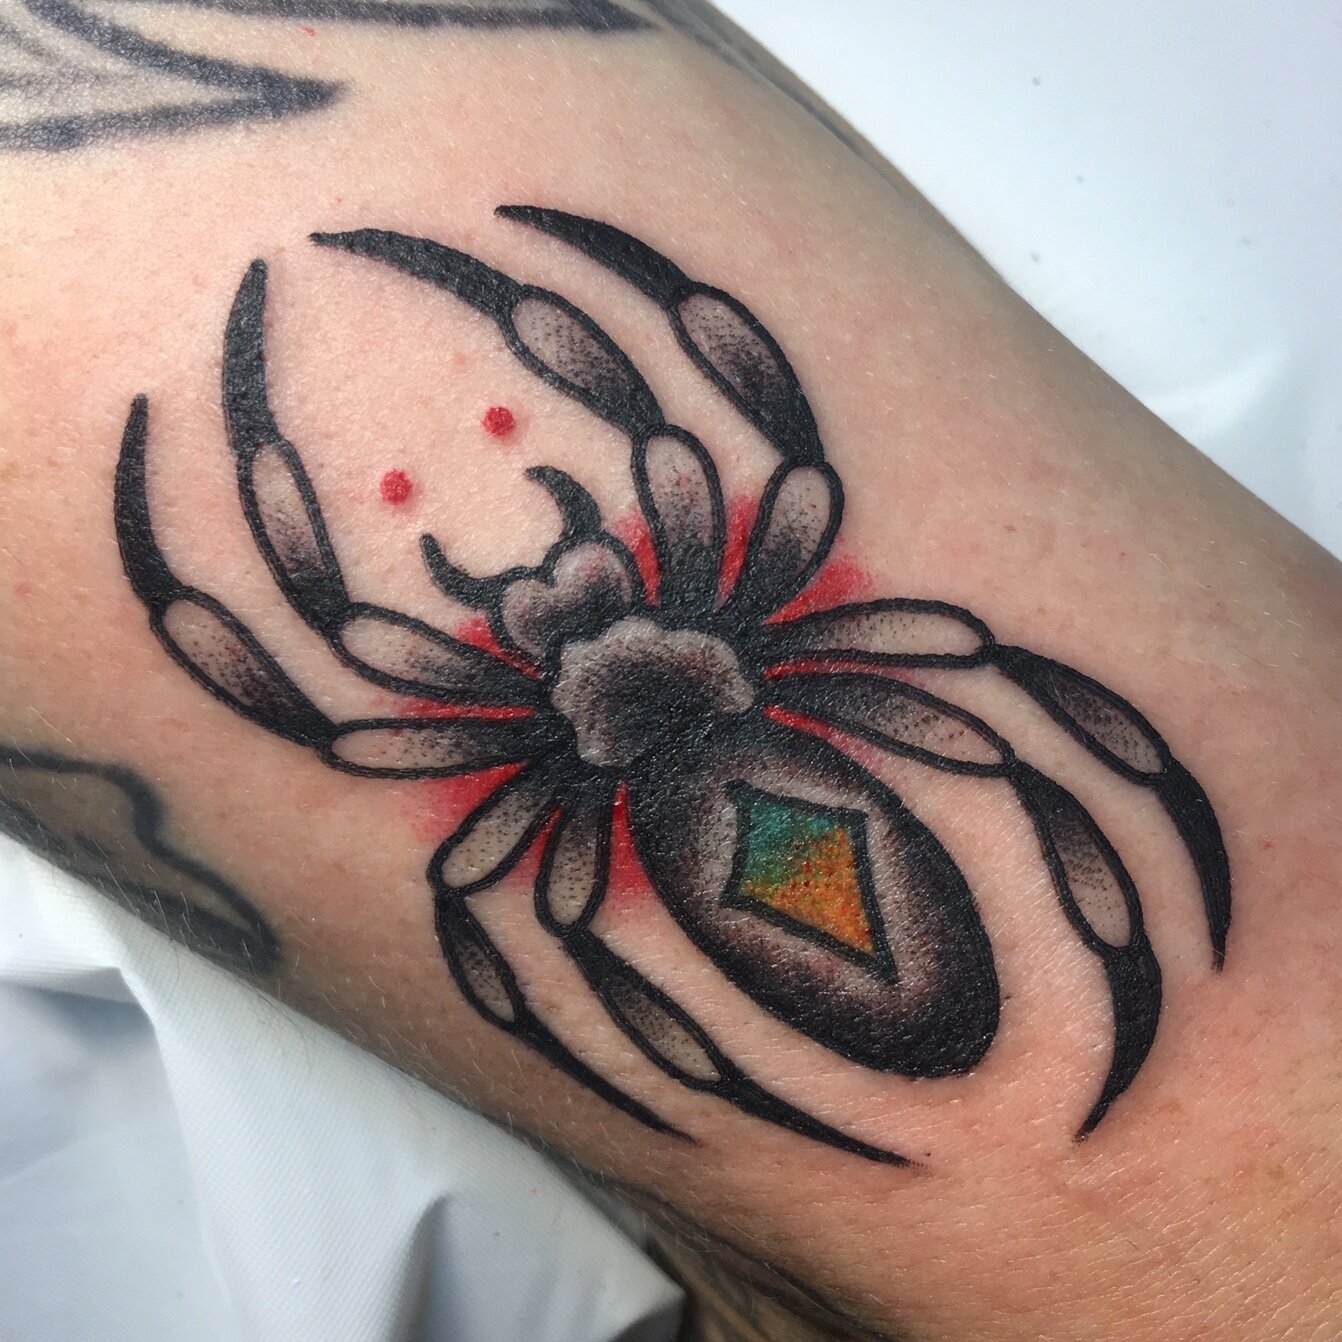 Traditional black widow spider tattoo by Brian Gattis at Southern Star Tattoo in Atlanta, Georgia